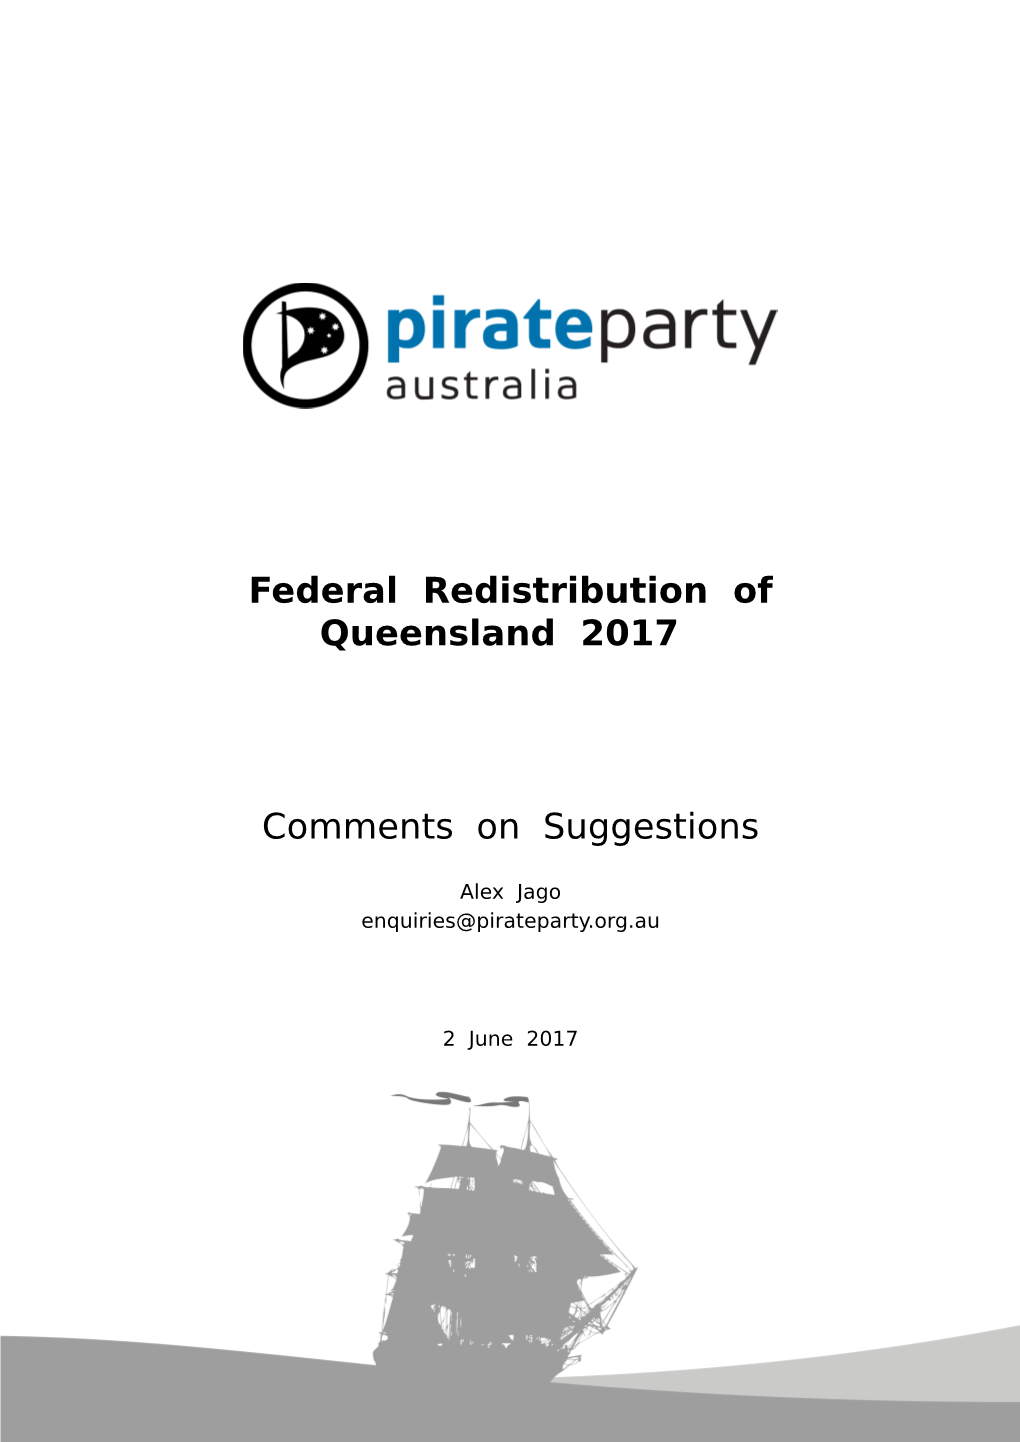 Federal Redistribution of Queensland 2017